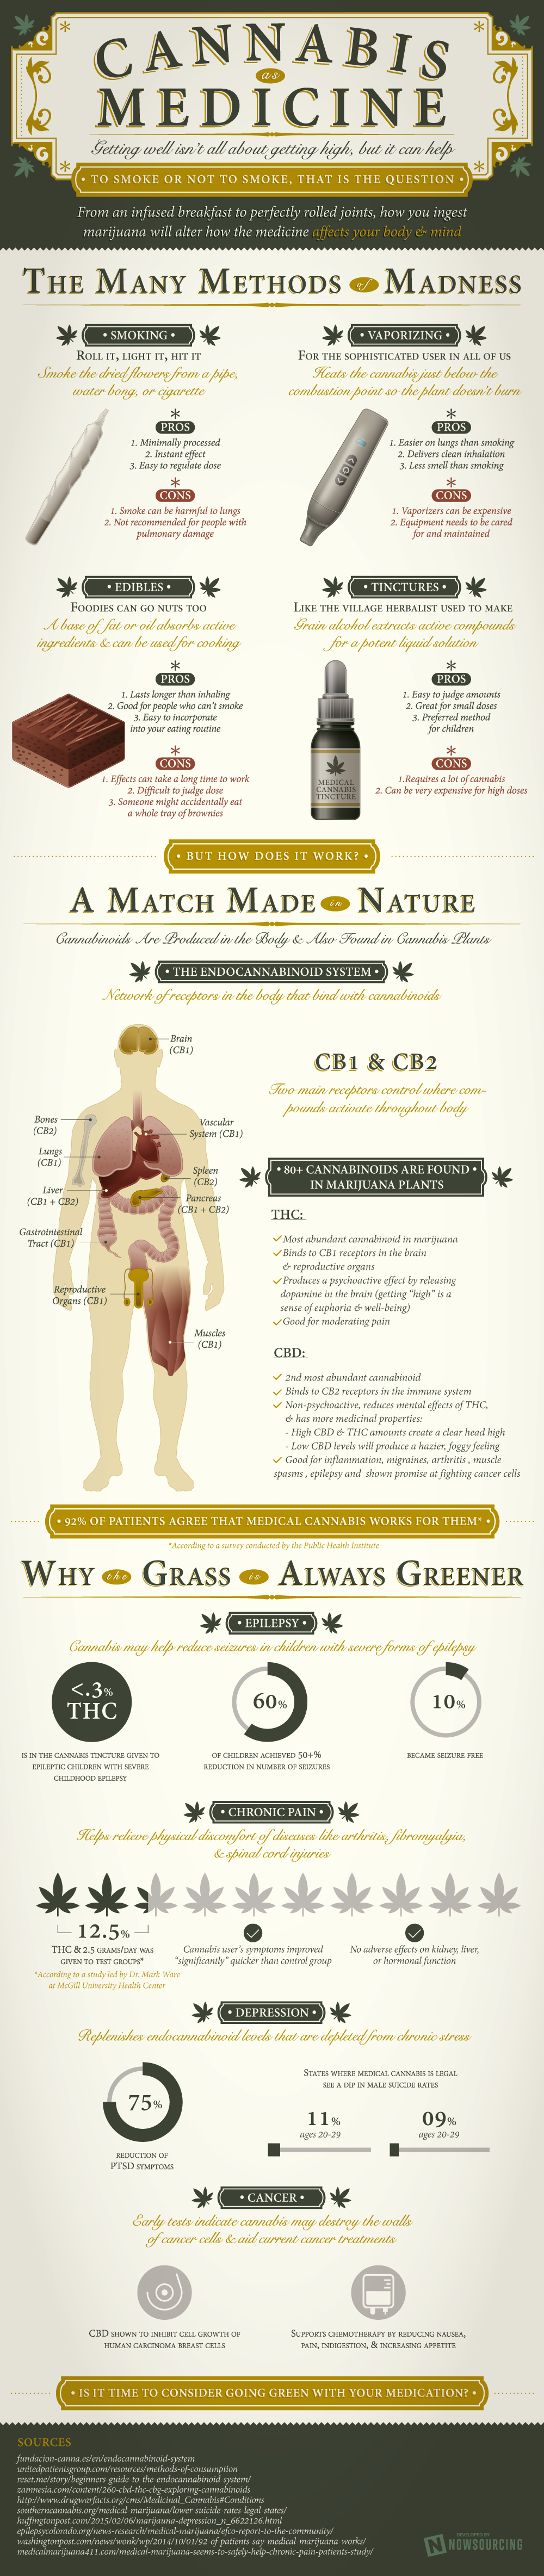 Cannabis-Medicine-Infographic